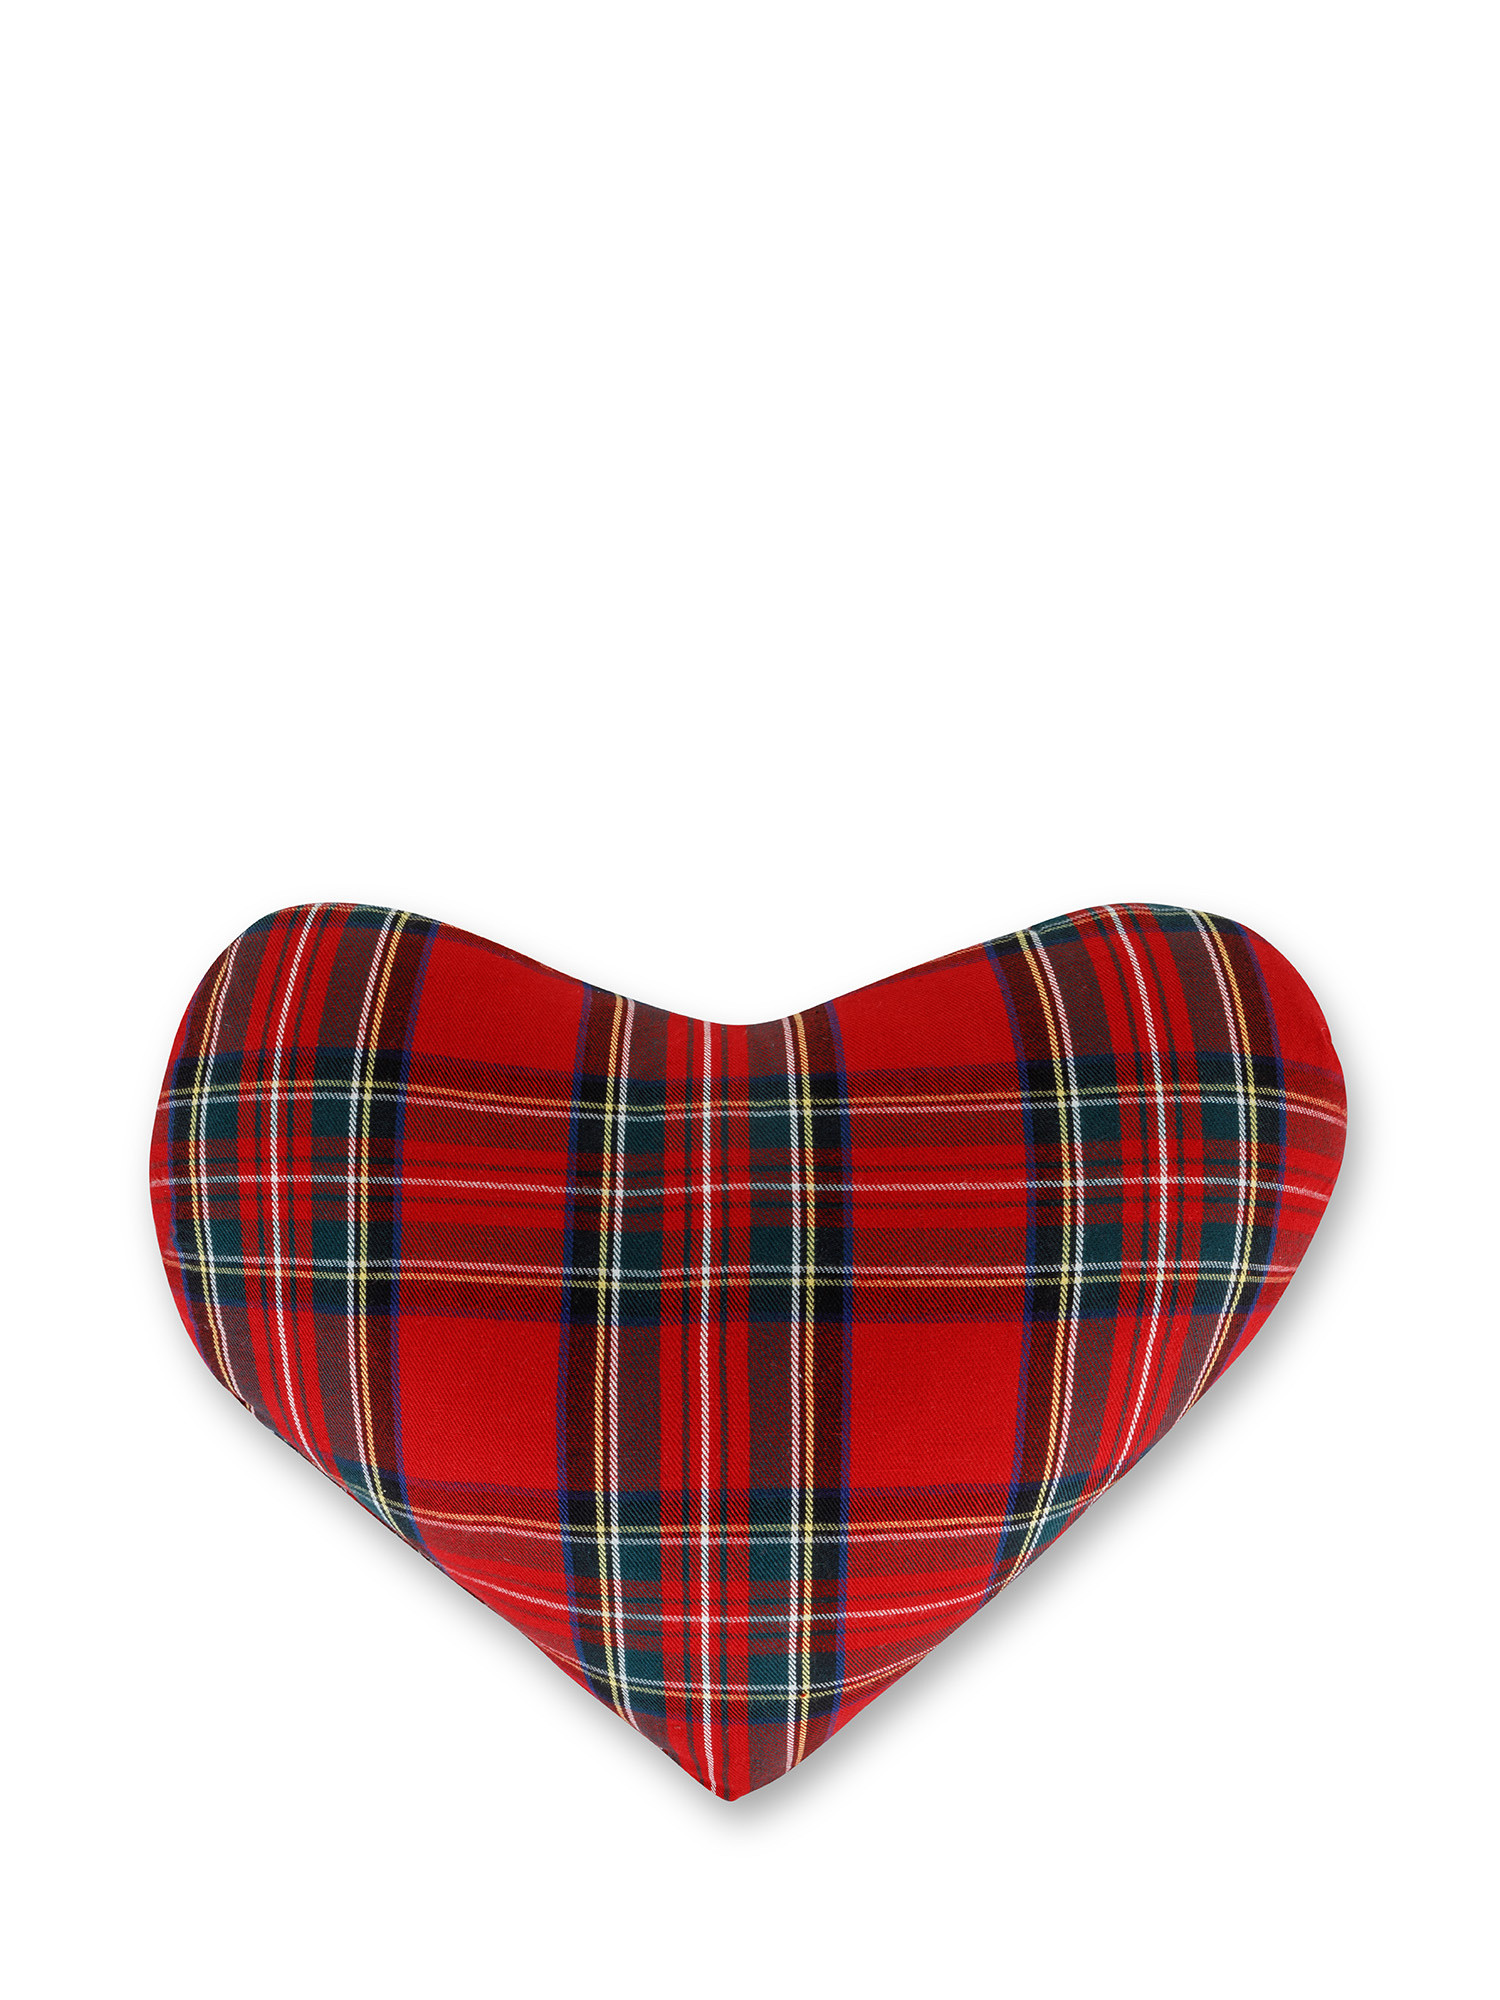 Tartan heart cushion, Red, large image number 0